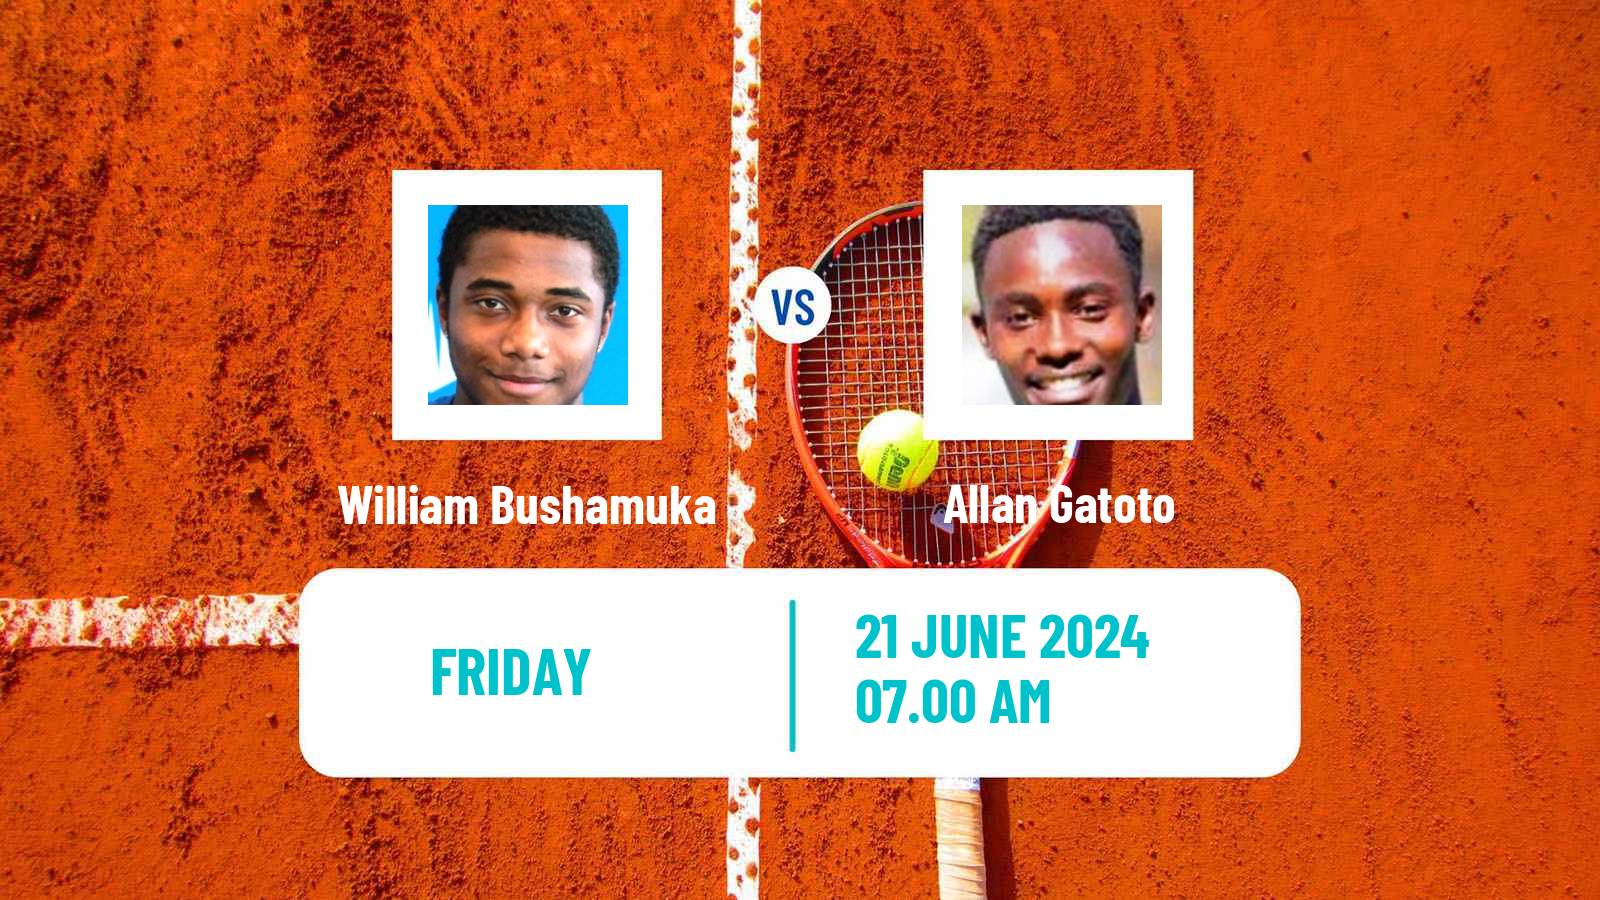 Tennis Davis Cup Group IV William Bushamuka - Allan Gatoto